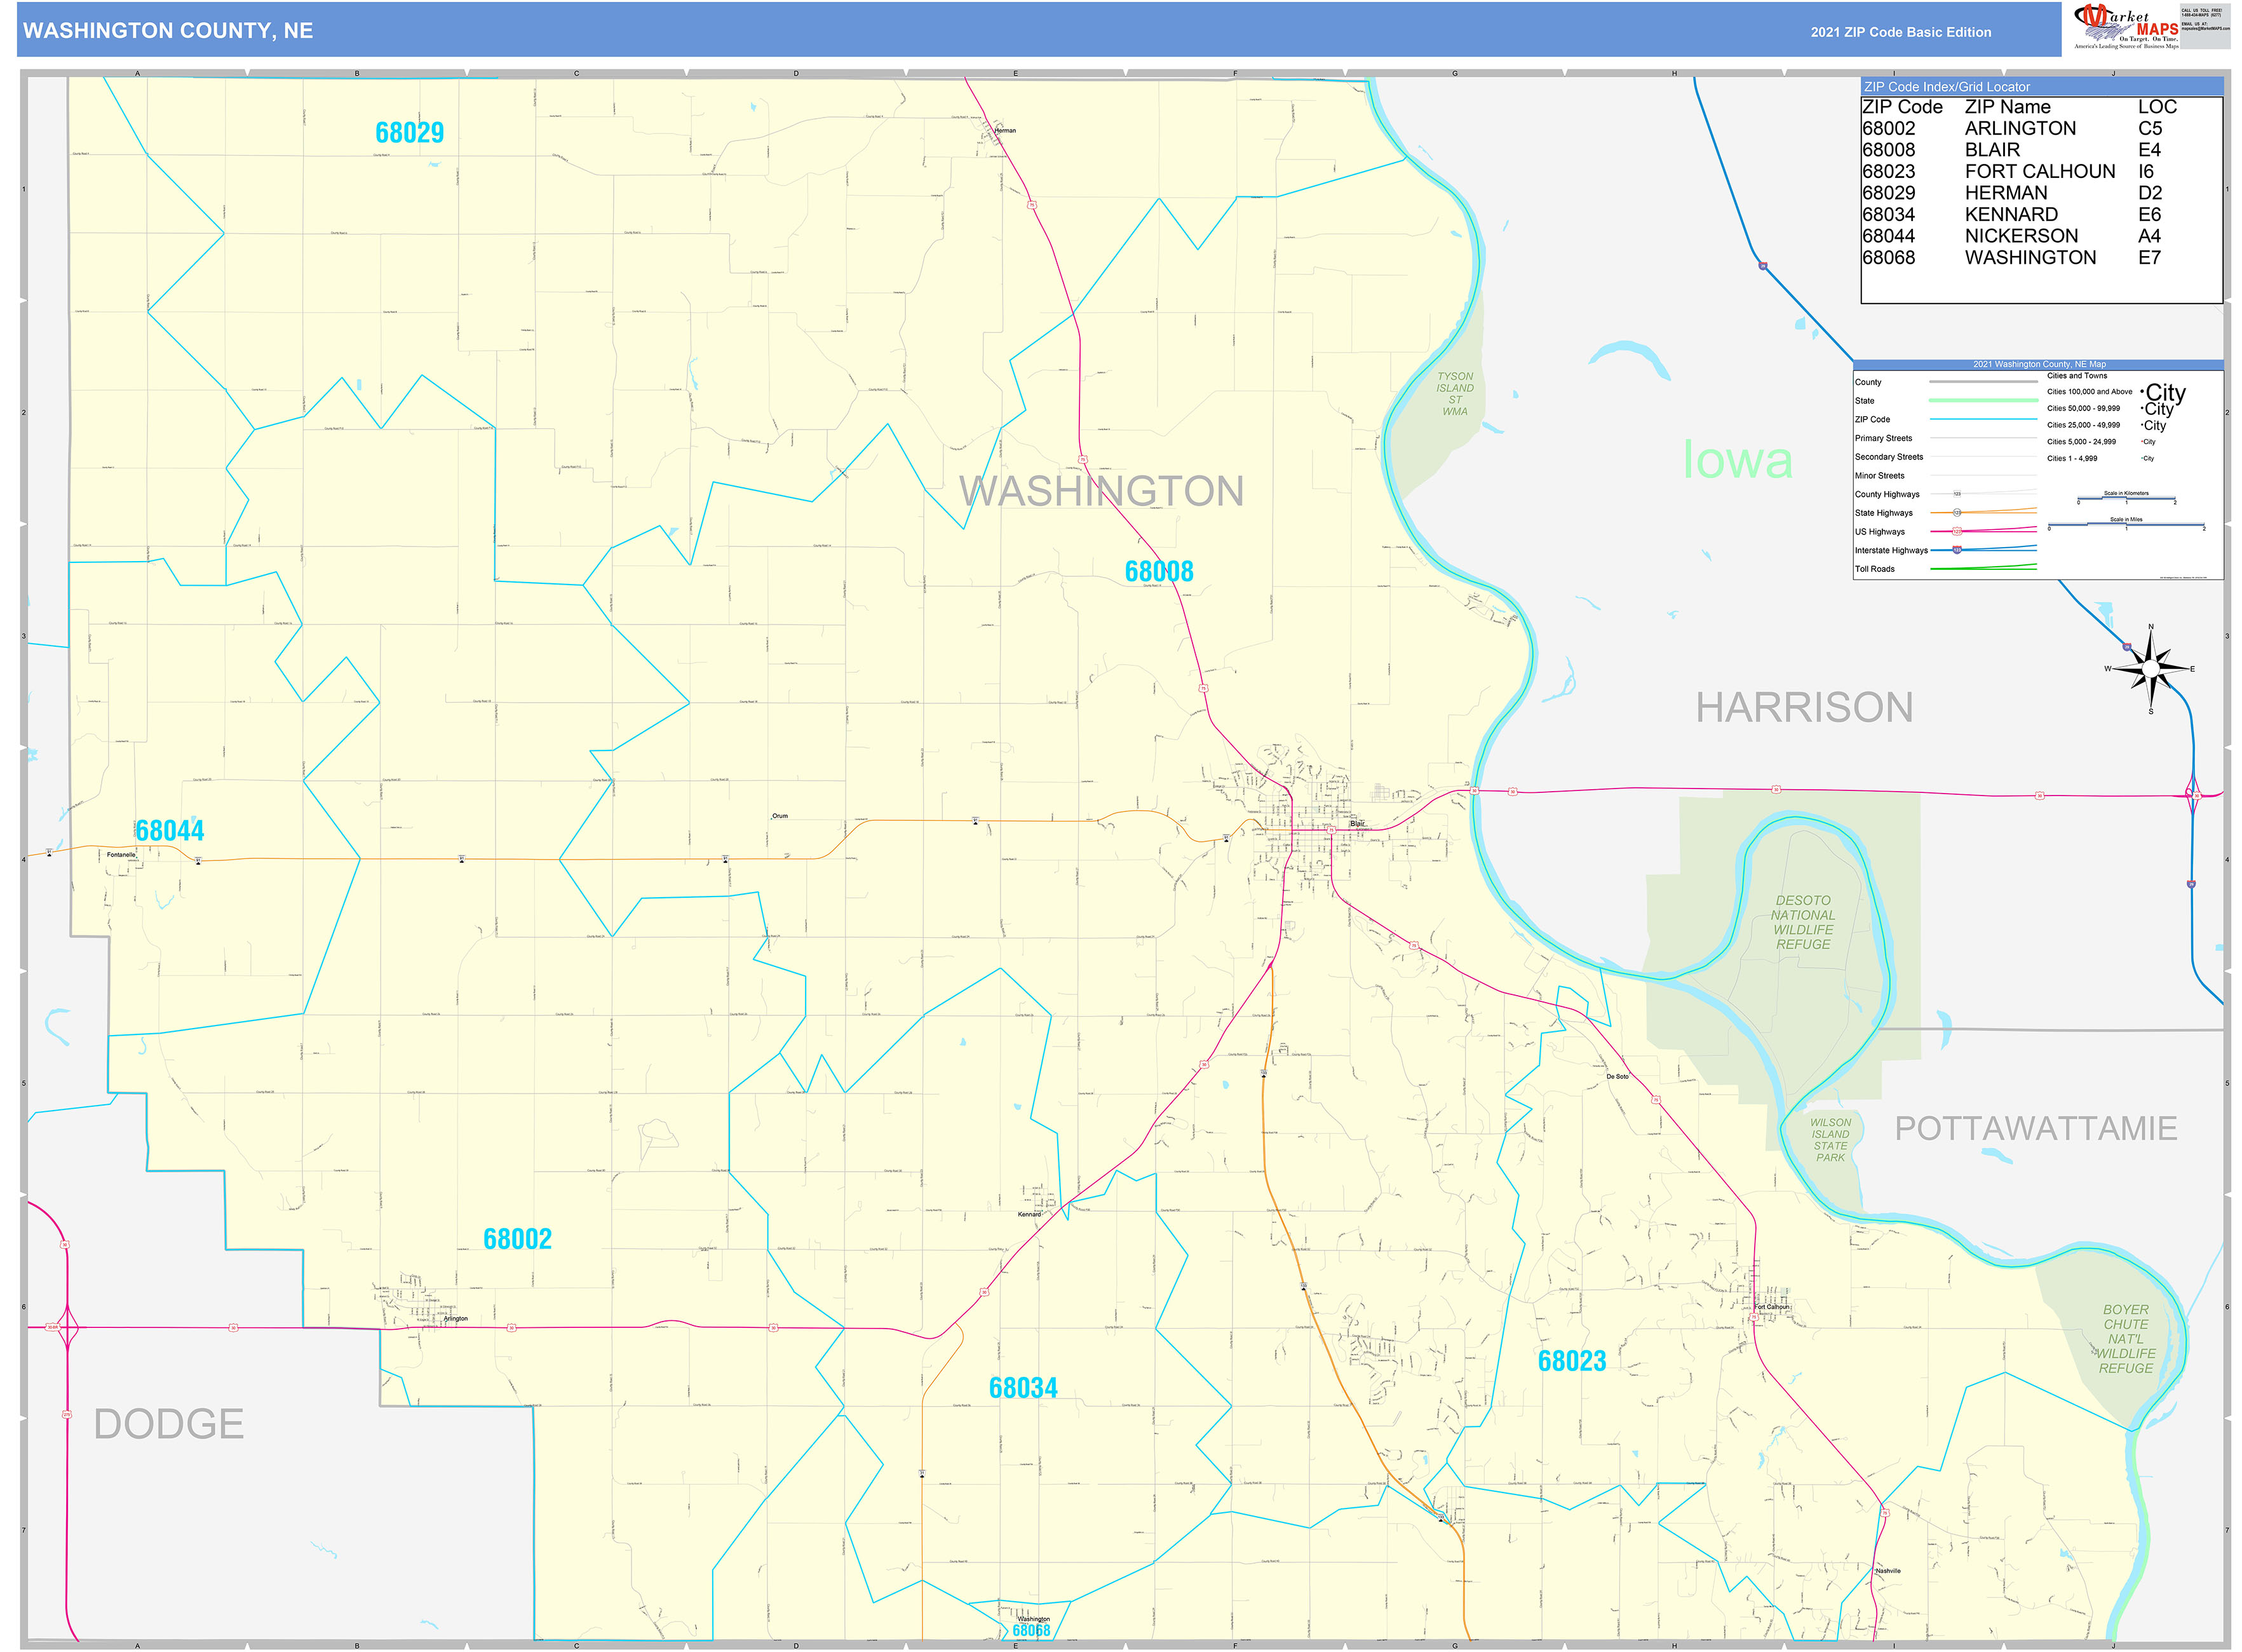 Washington County, NE Zip Code Wall Map Basic Style by MarketMAPS